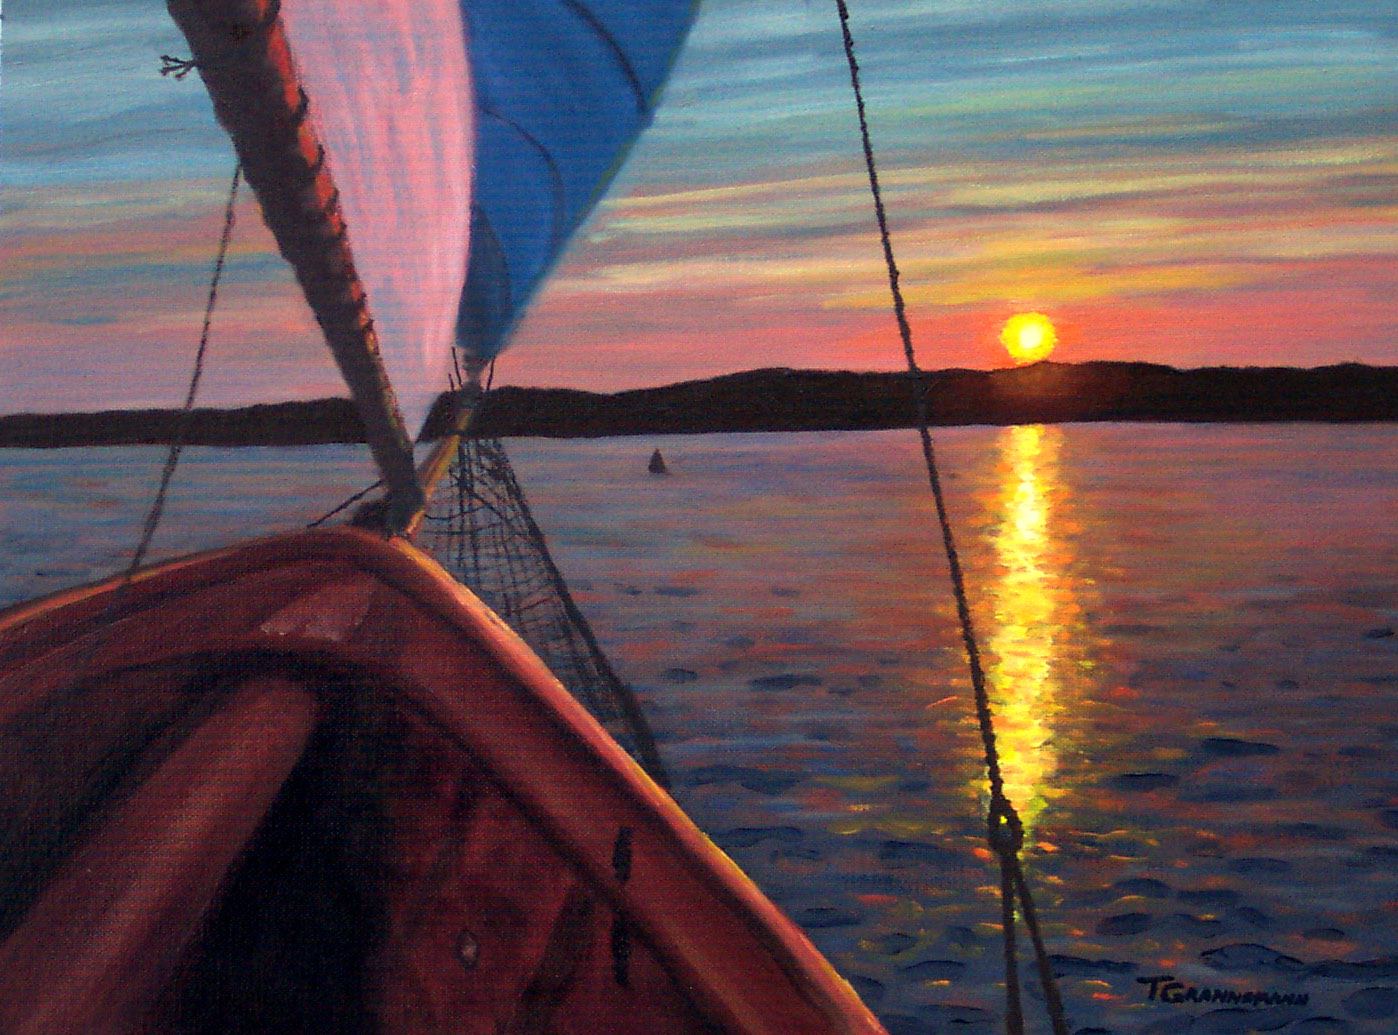 Under Sail at Sunset